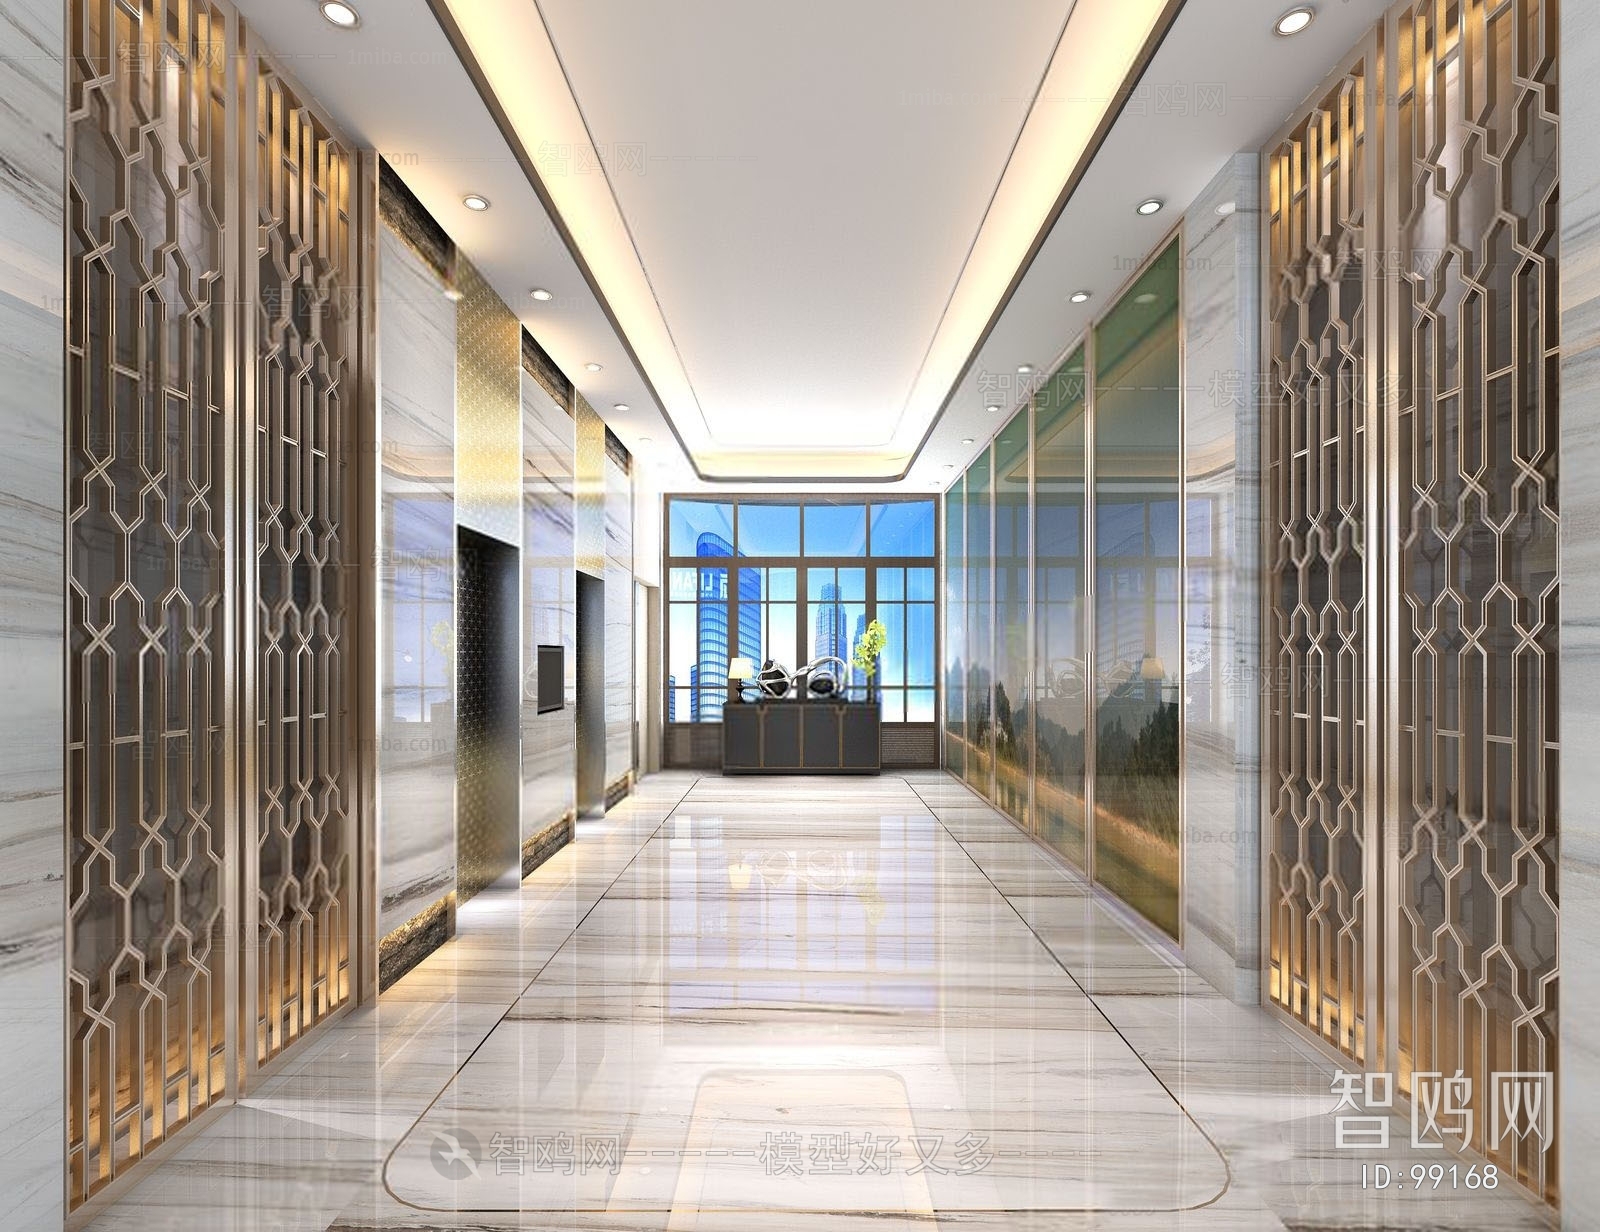 New Classical Style Corridor Elevator Hall